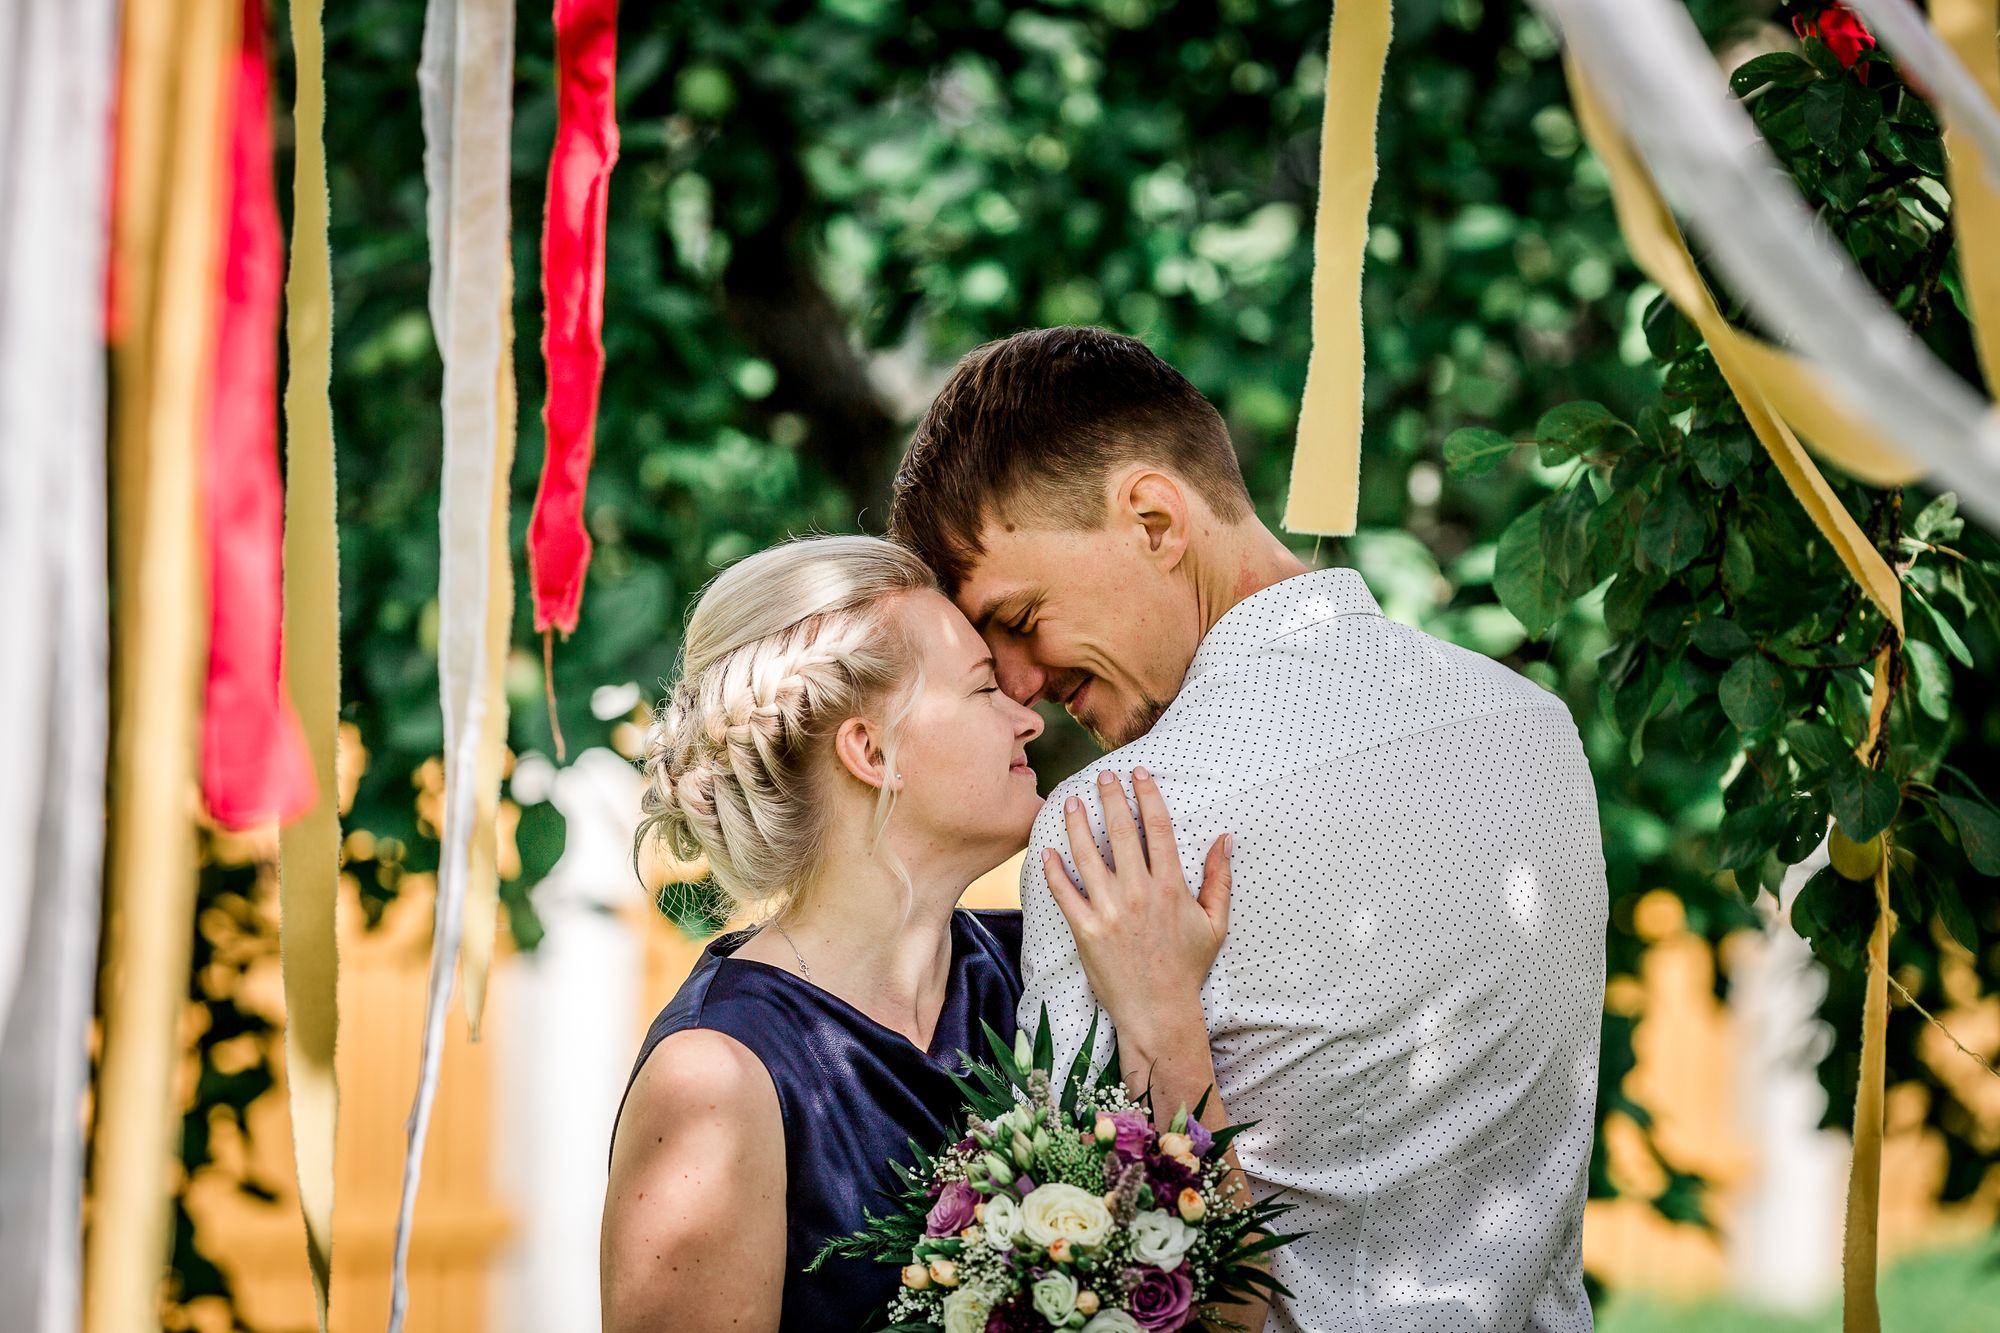 My 2019: We got married